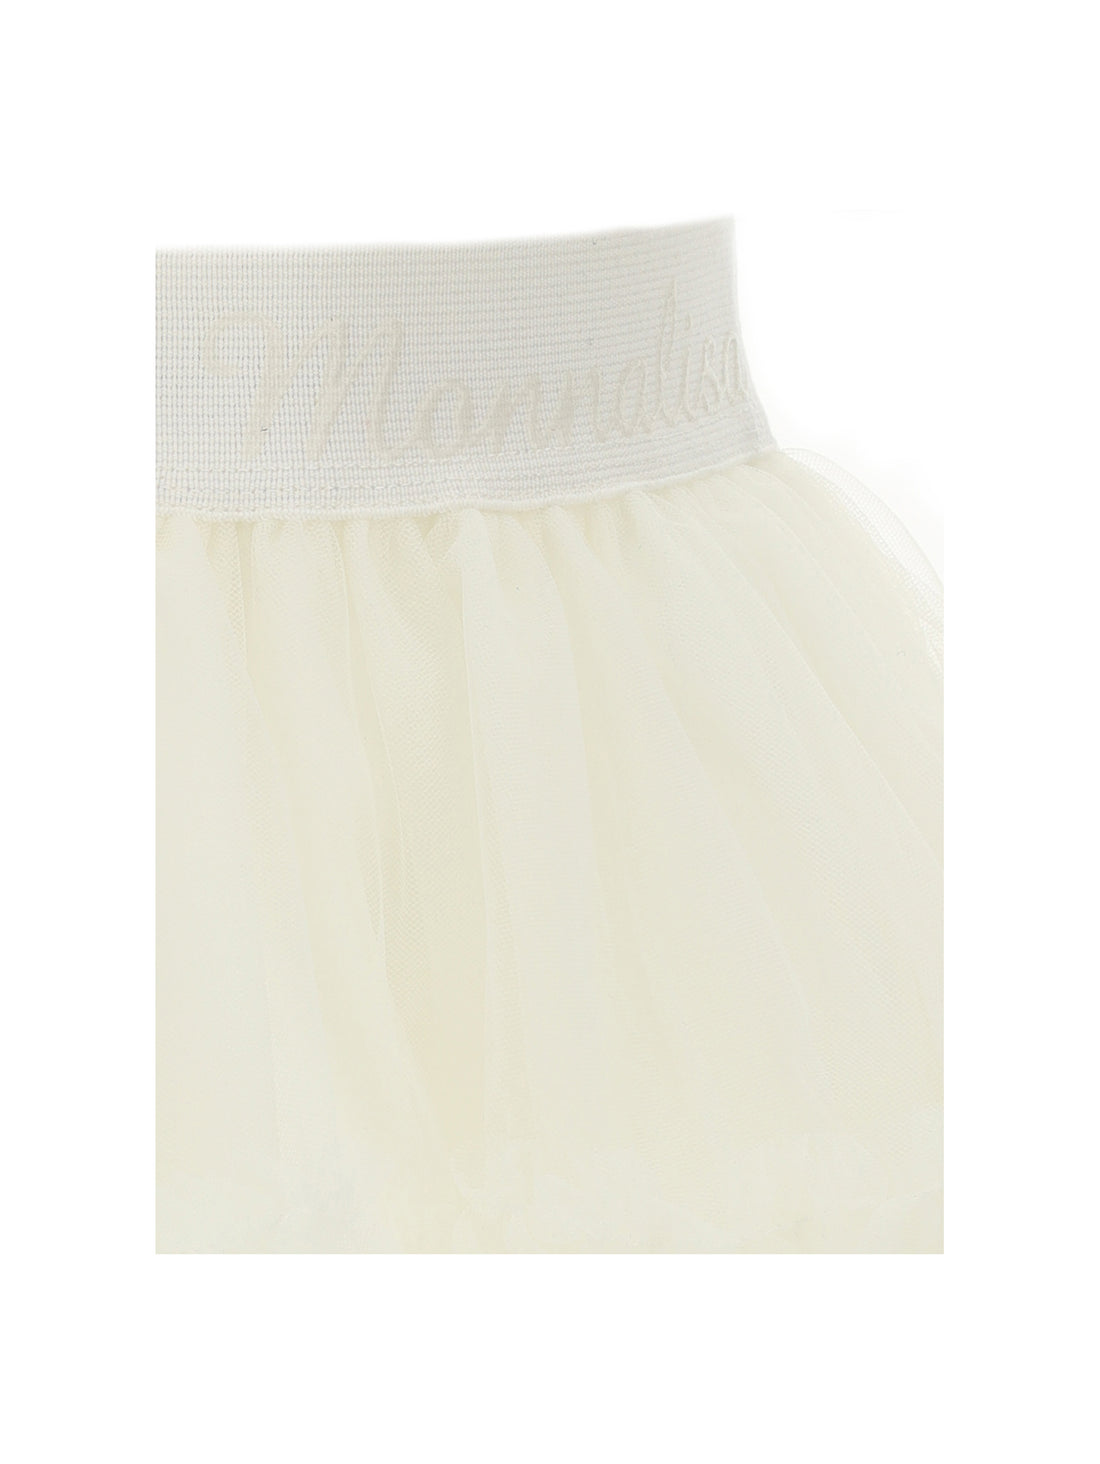 Monnalisa Basic-Skirt Style: 170Gon T9945